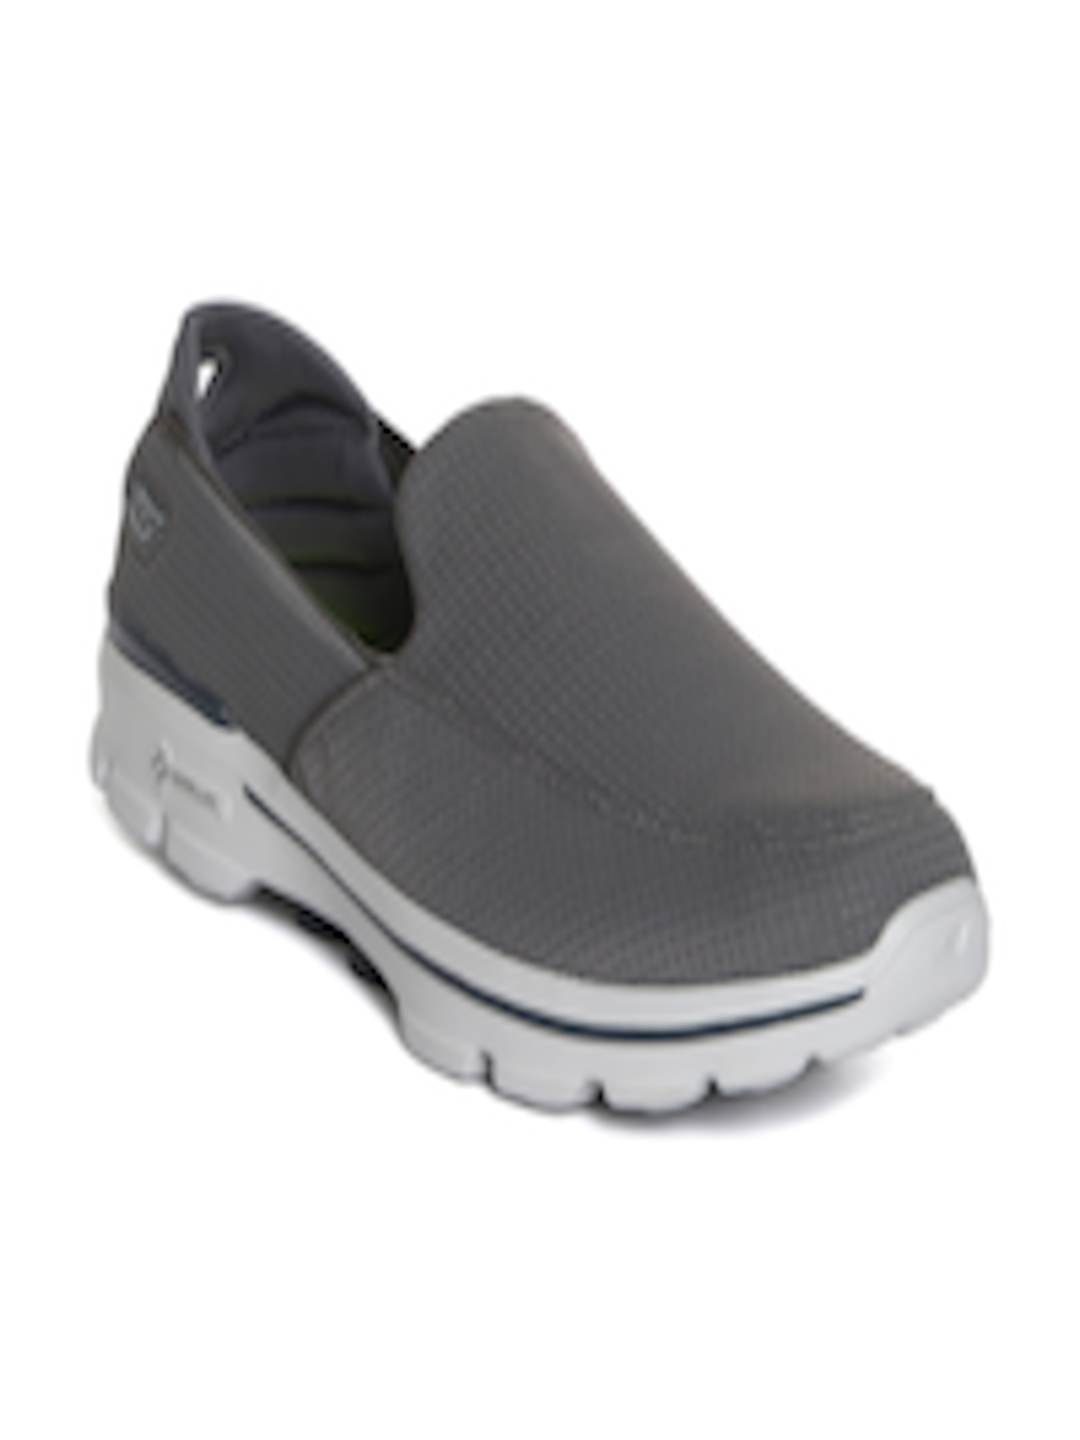 Buy Skechers Men Grey GO Walk 3 Shoes - Sports Shoes for Men 1563750 ...